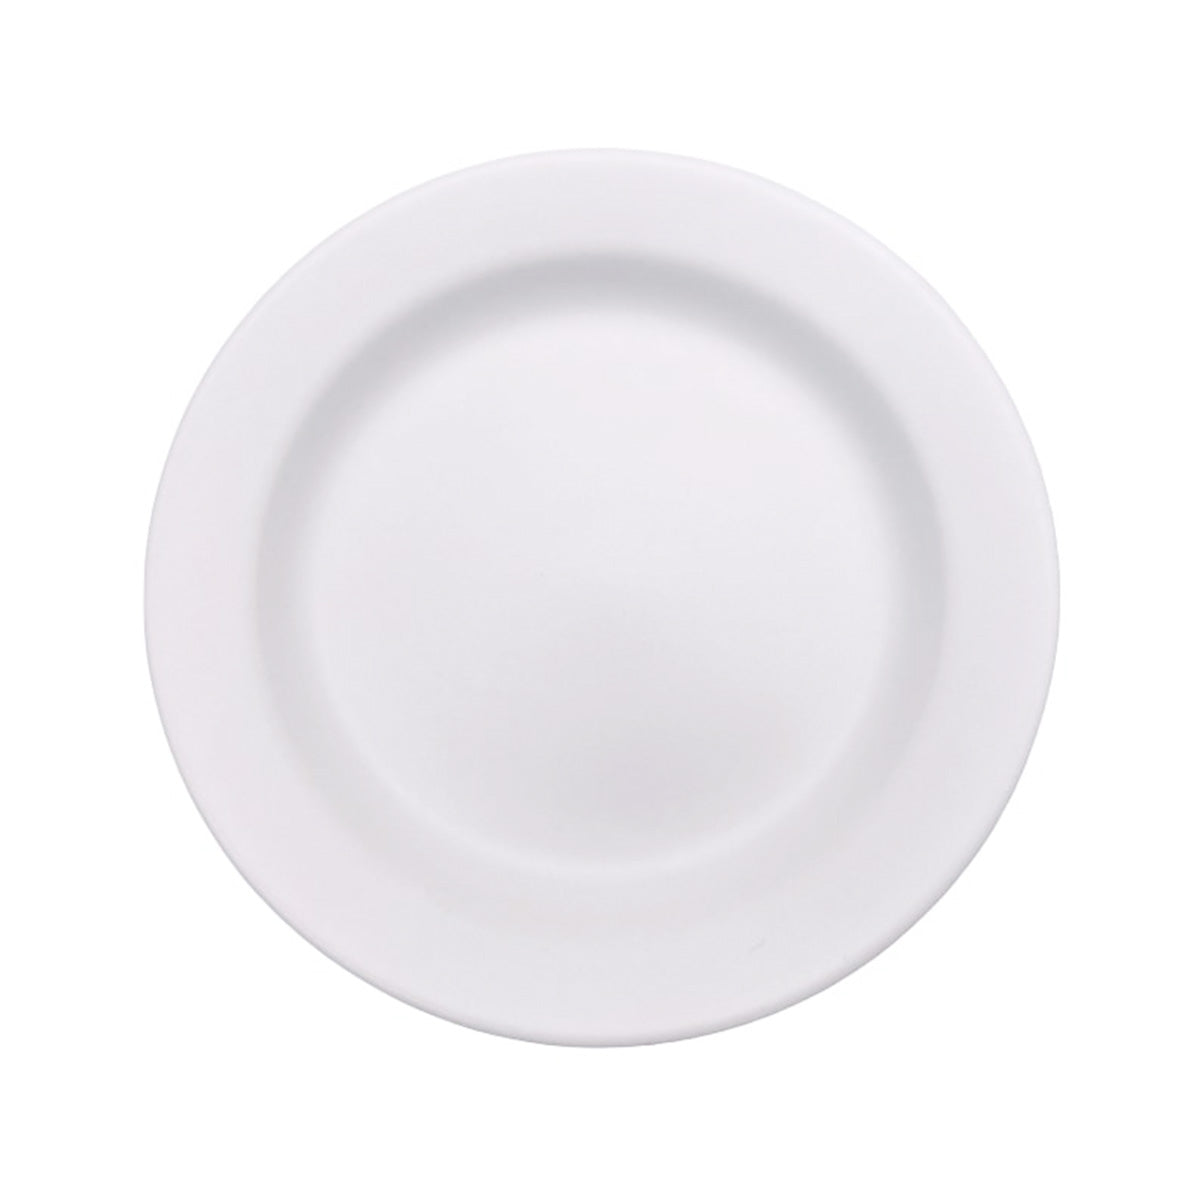 【OUTLET】皿 取り皿 プレート Tokinone PB.小皿 ホワイト 12x12x1.5cm 049045